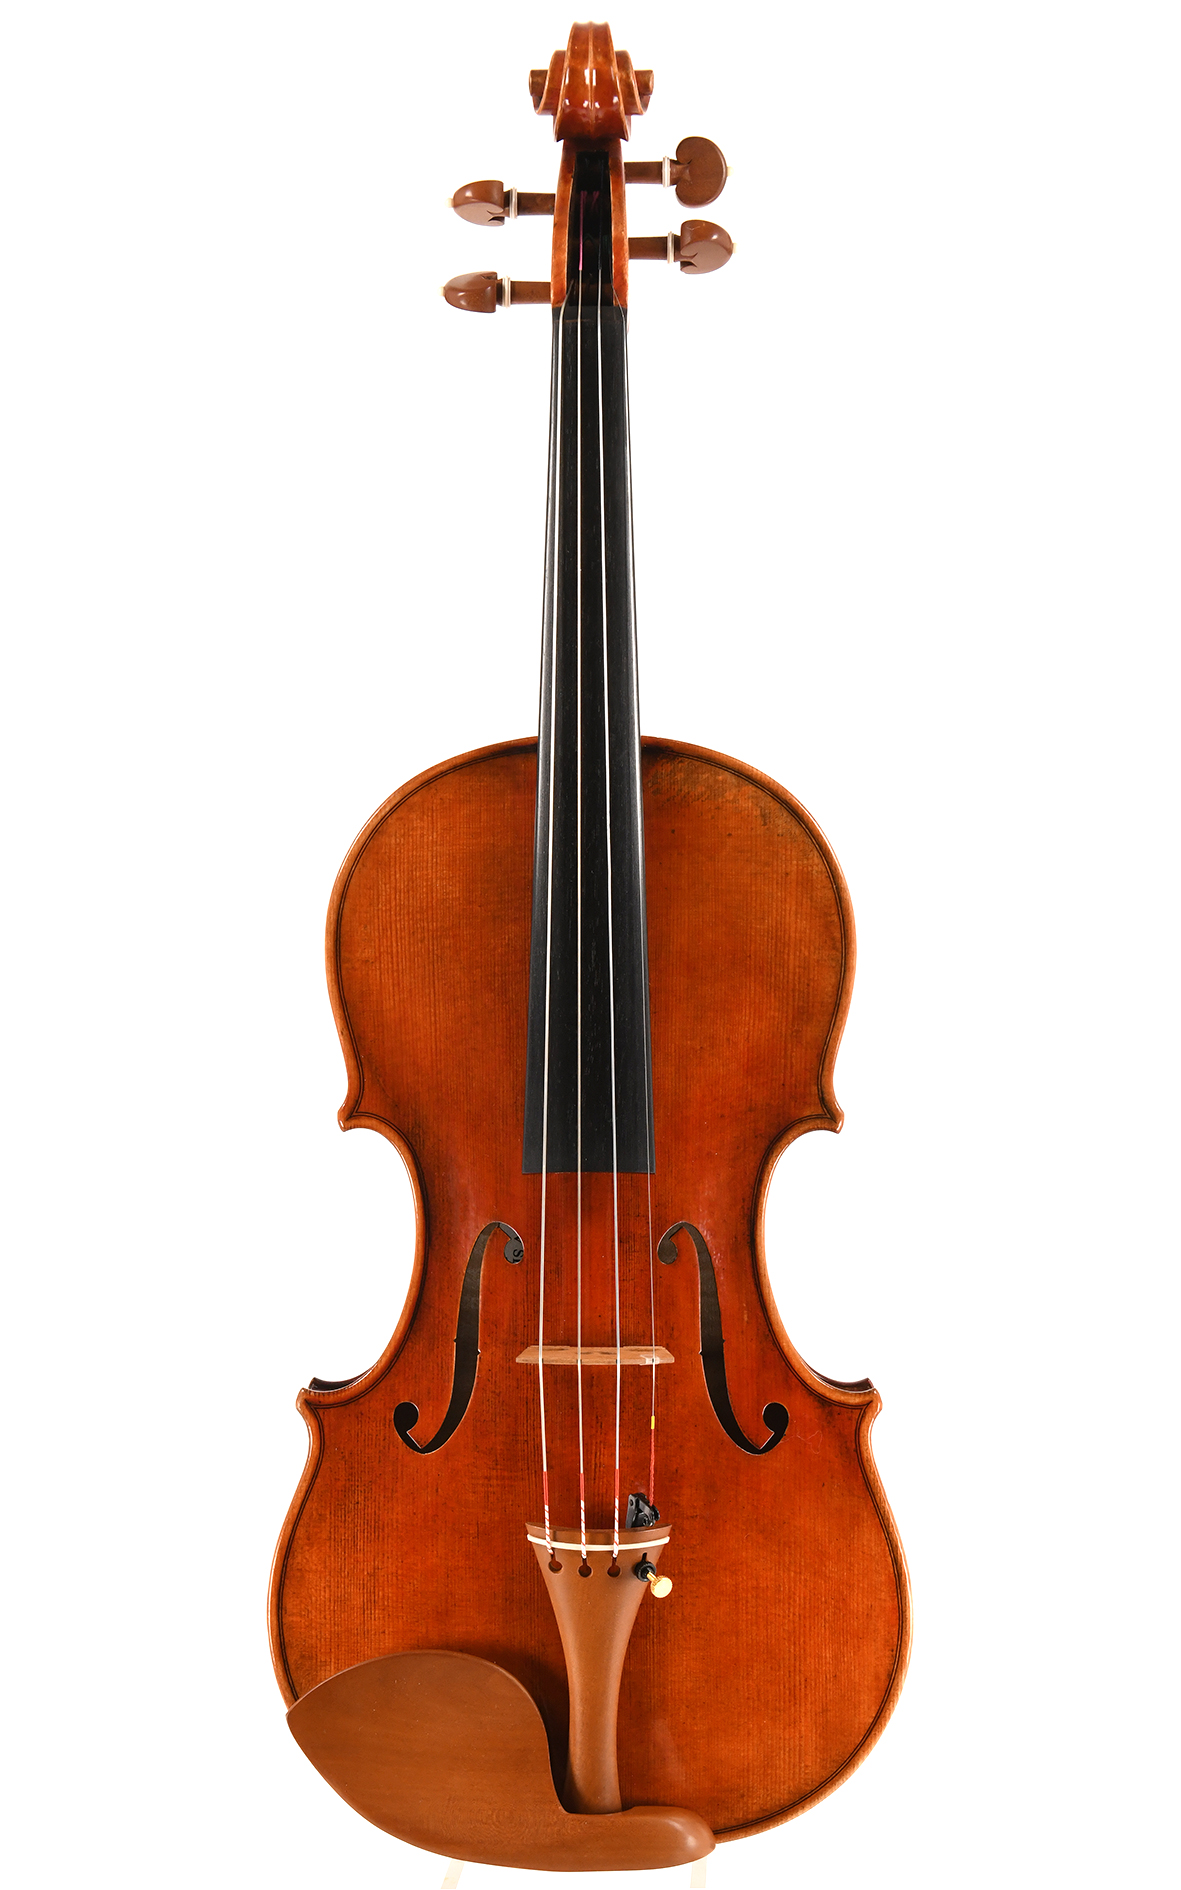 Meistergeige opus 1 aus dem CV Selectio Portfolio von Corilon violins